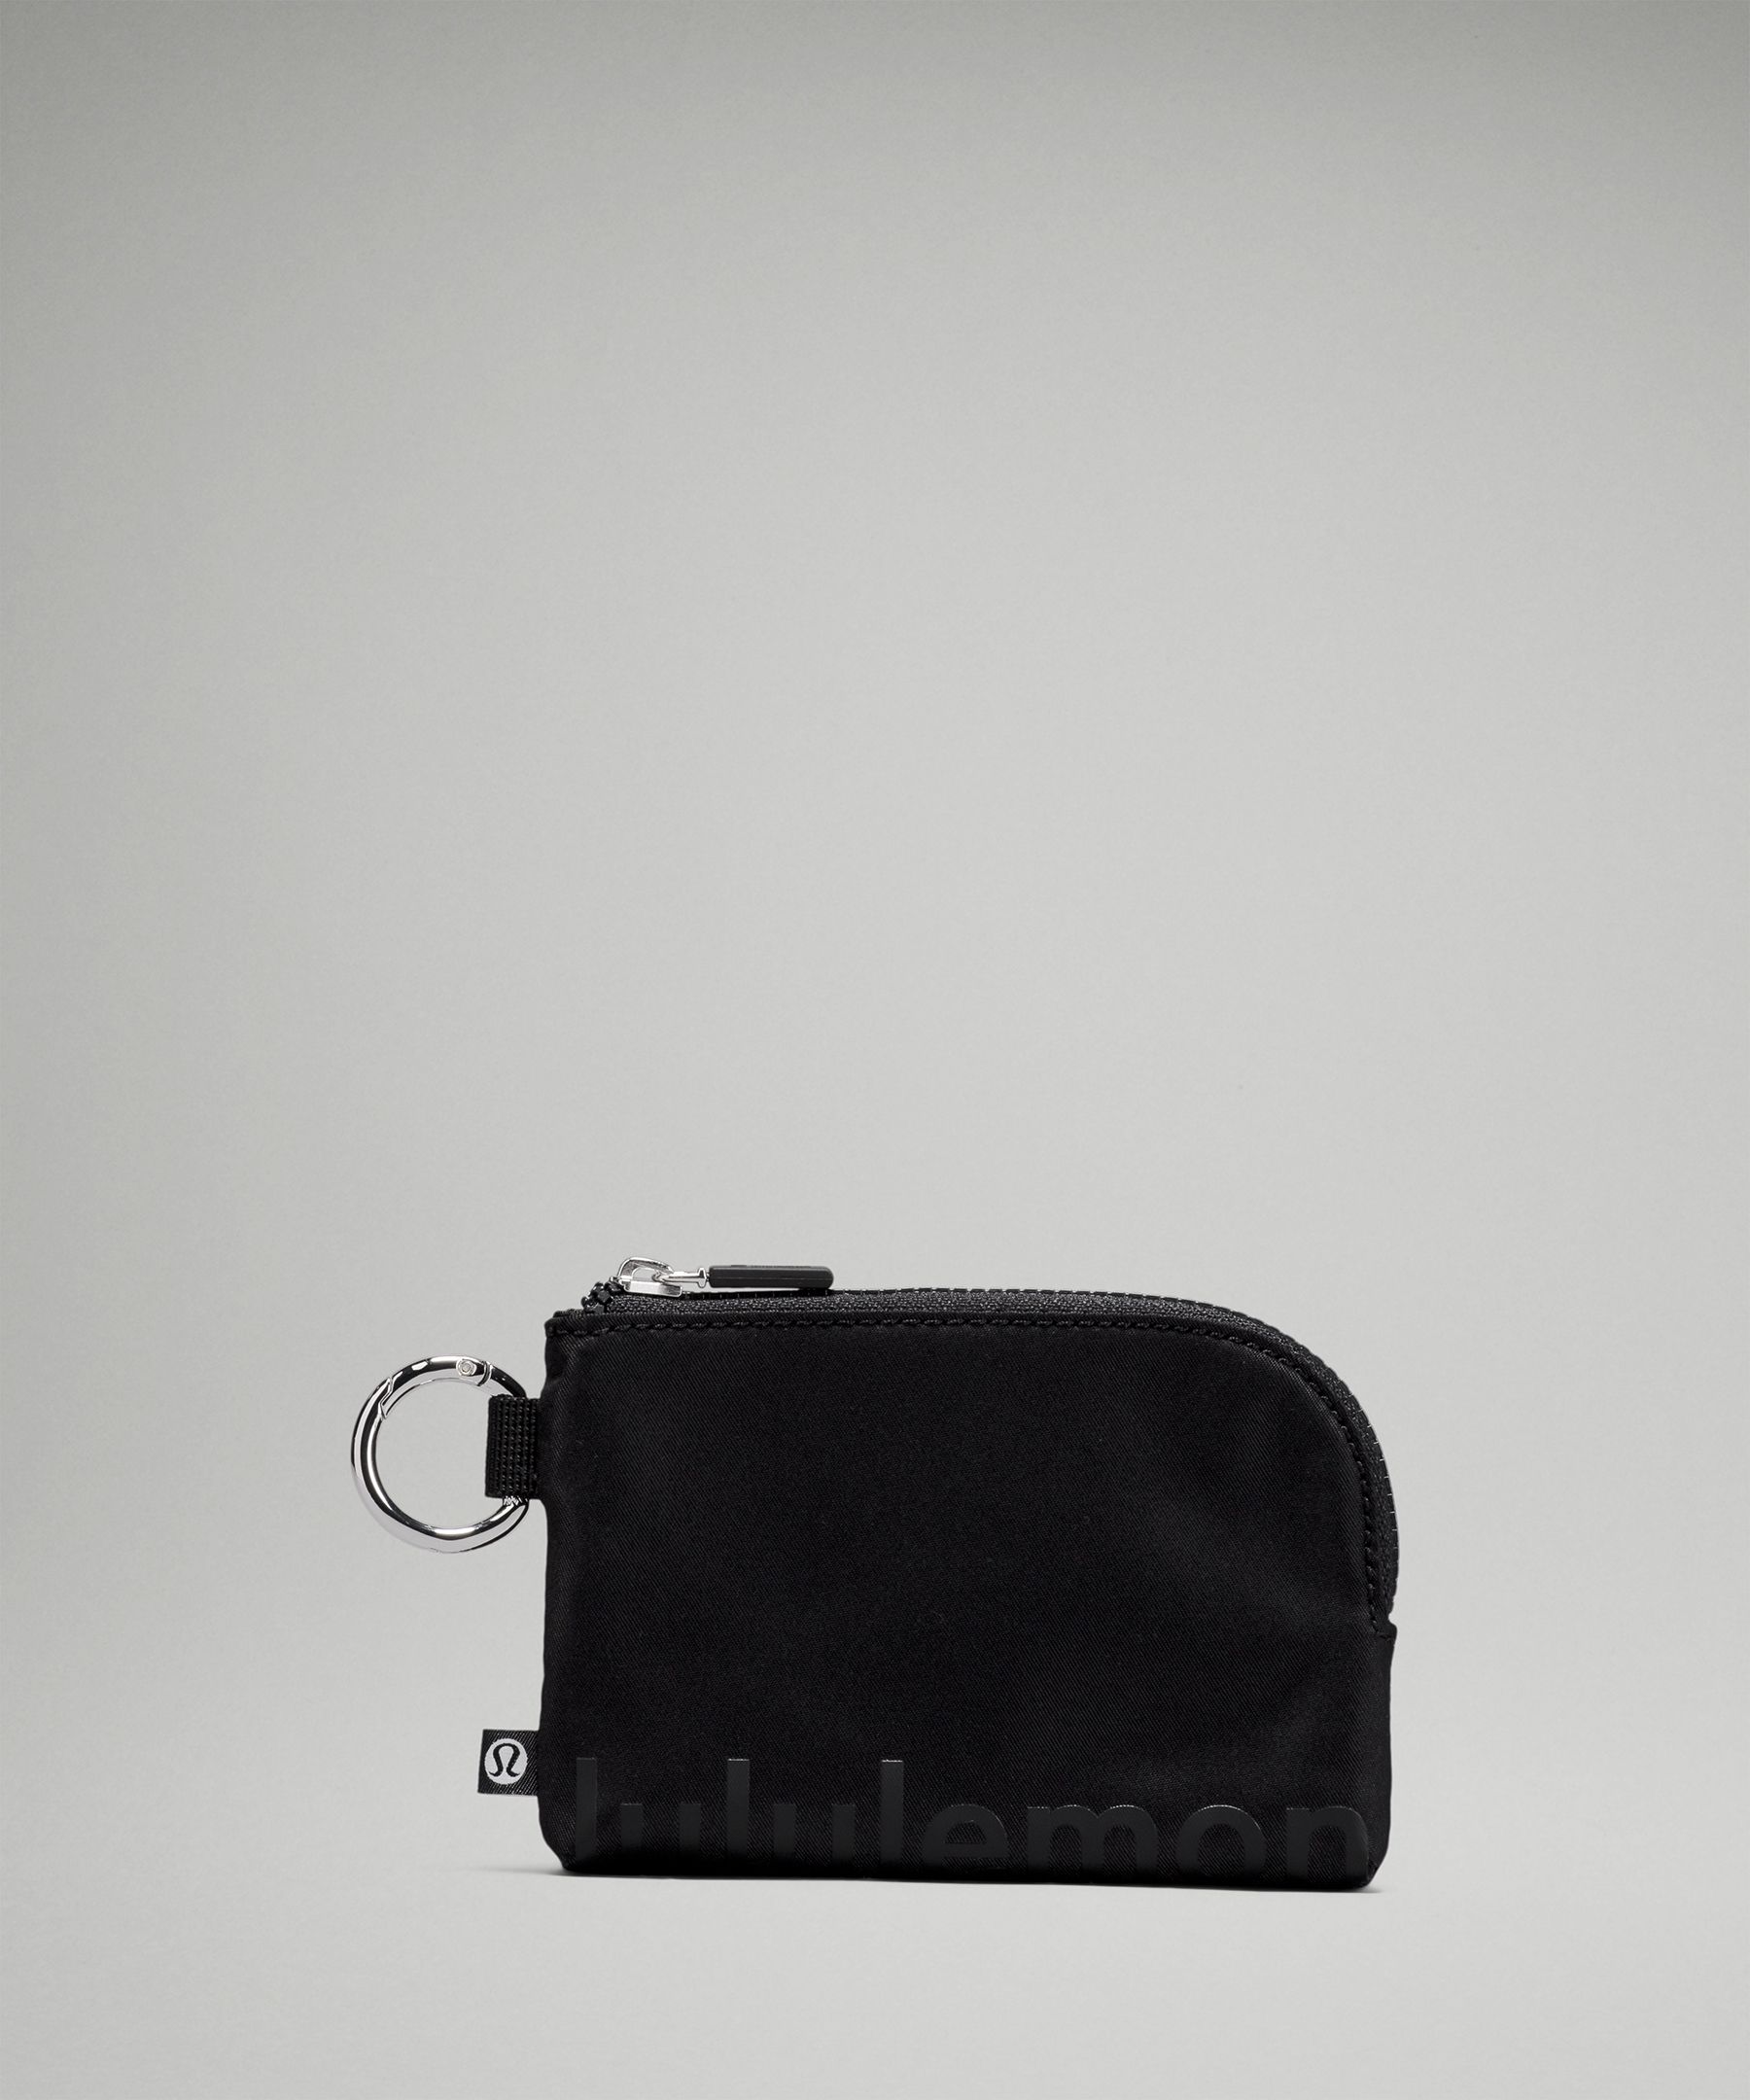 Lululemon handmade key chain luggage tag purse tag A35